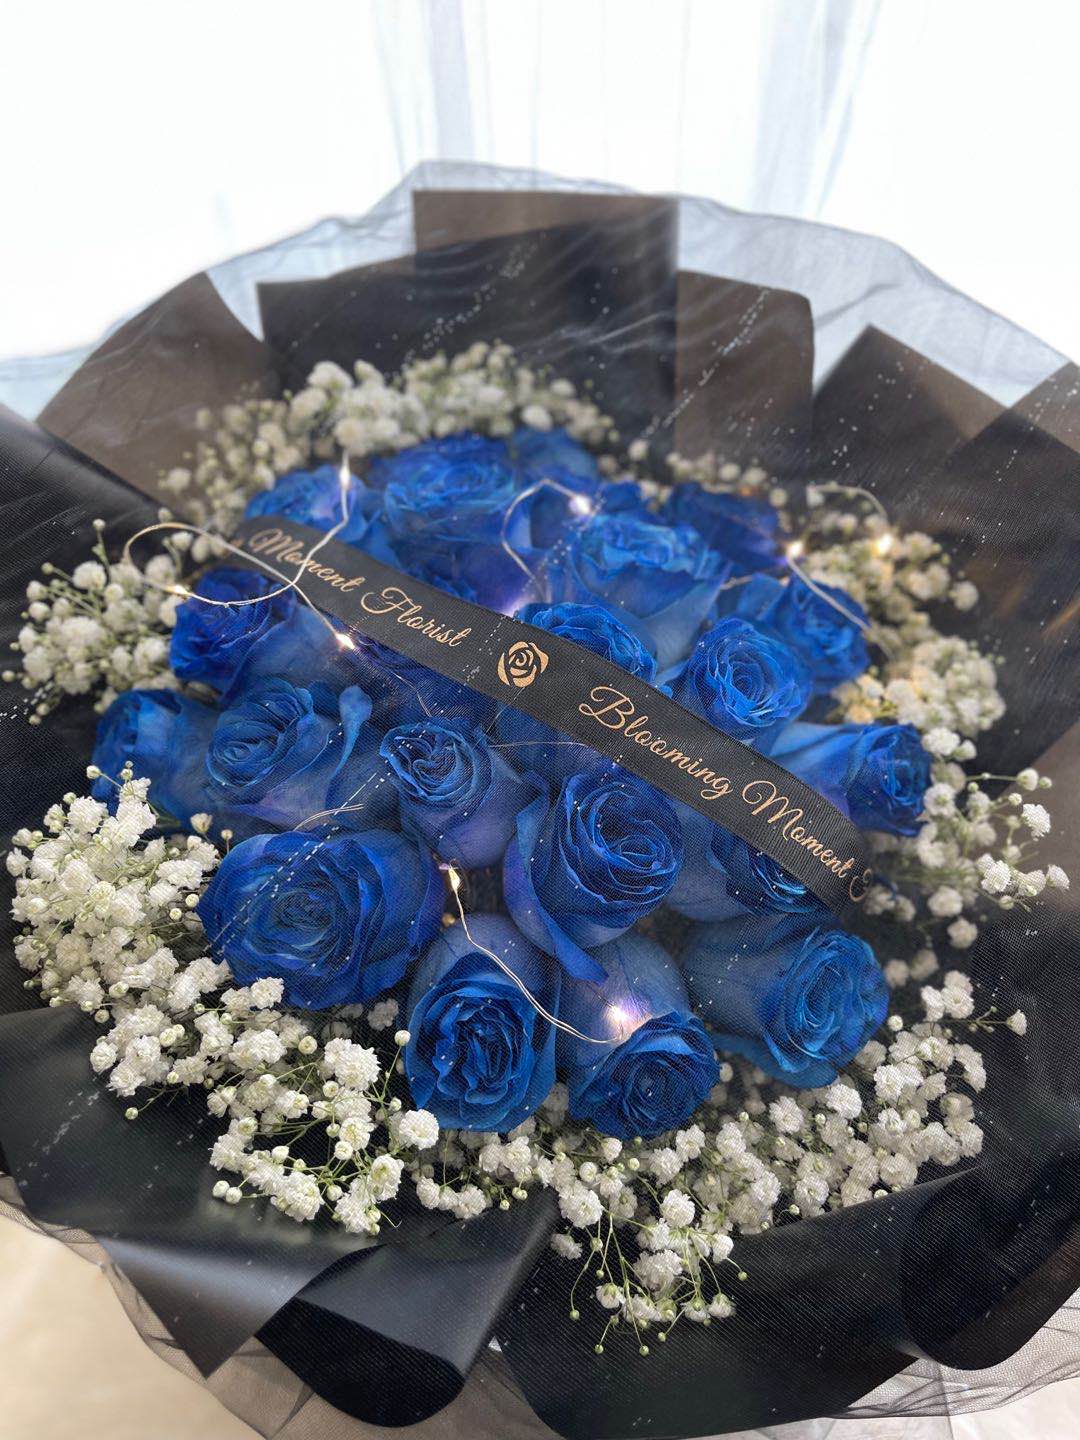 [FLOWER] 宝蓝色玫瑰花束